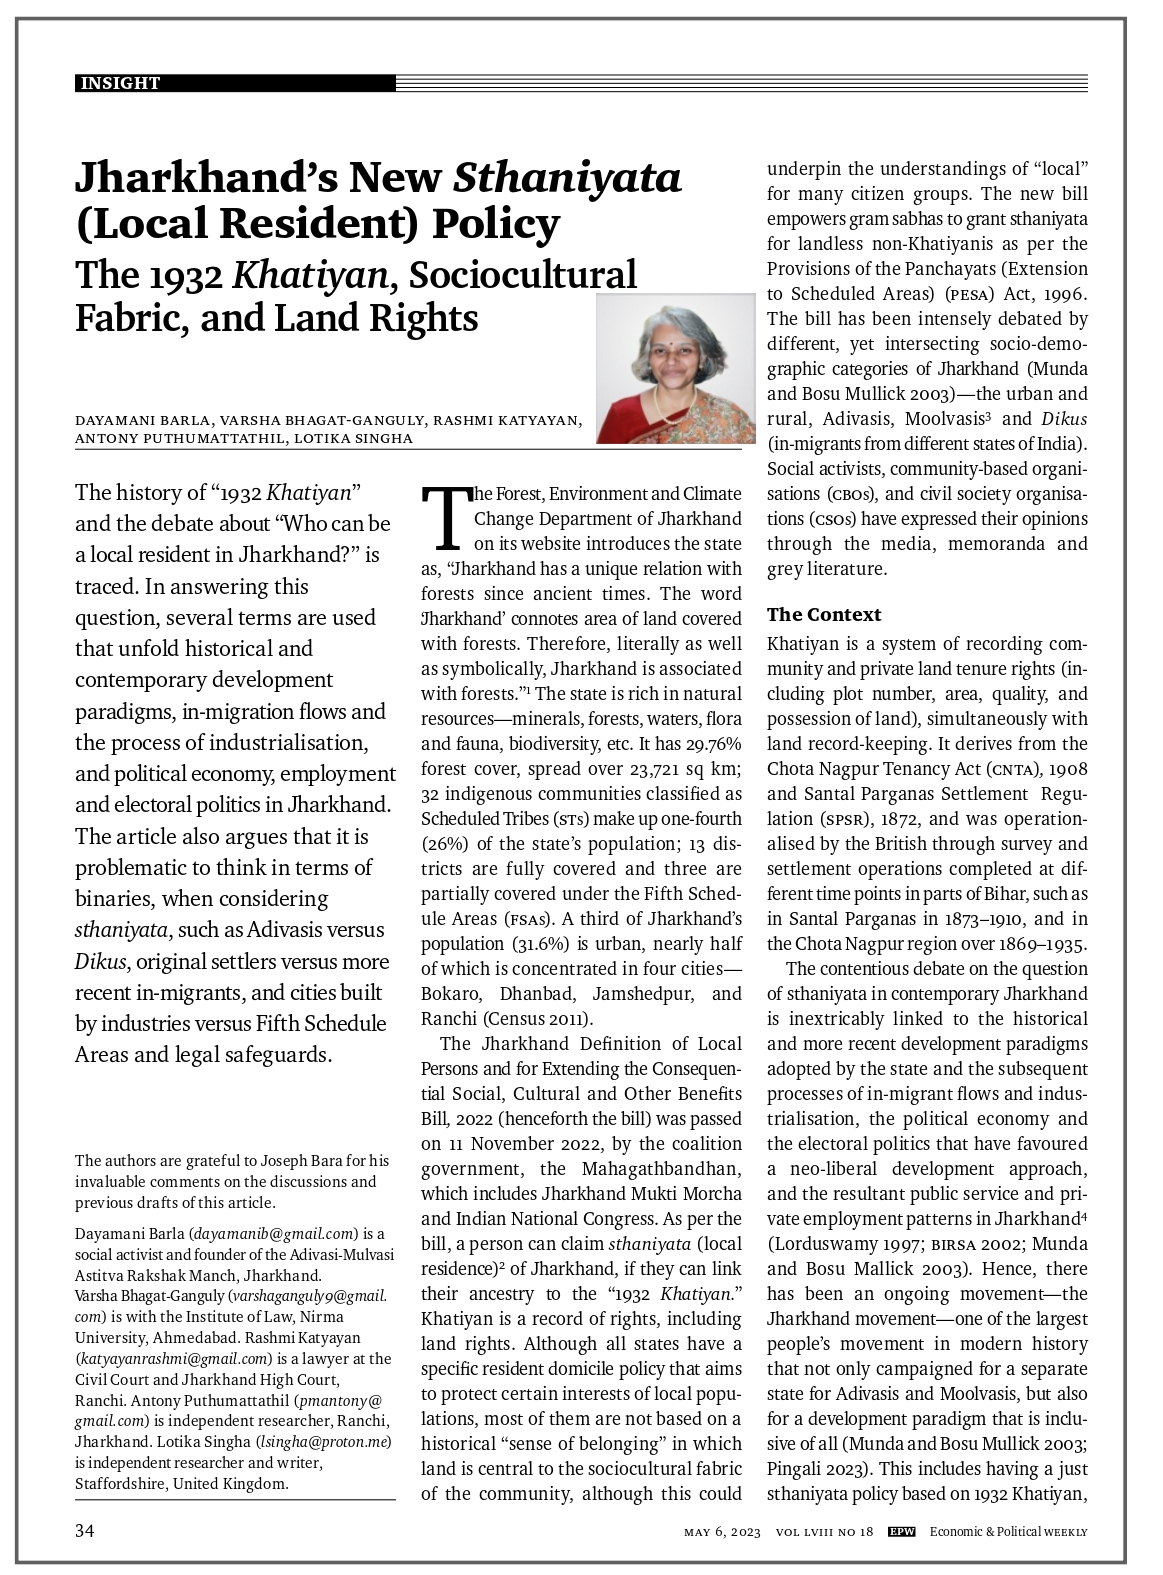 Jharkhand’s New Sthaniyata (Local Resident) Policy The 1932 Khatiyan, Sociocultural Fabric, and Land Rights